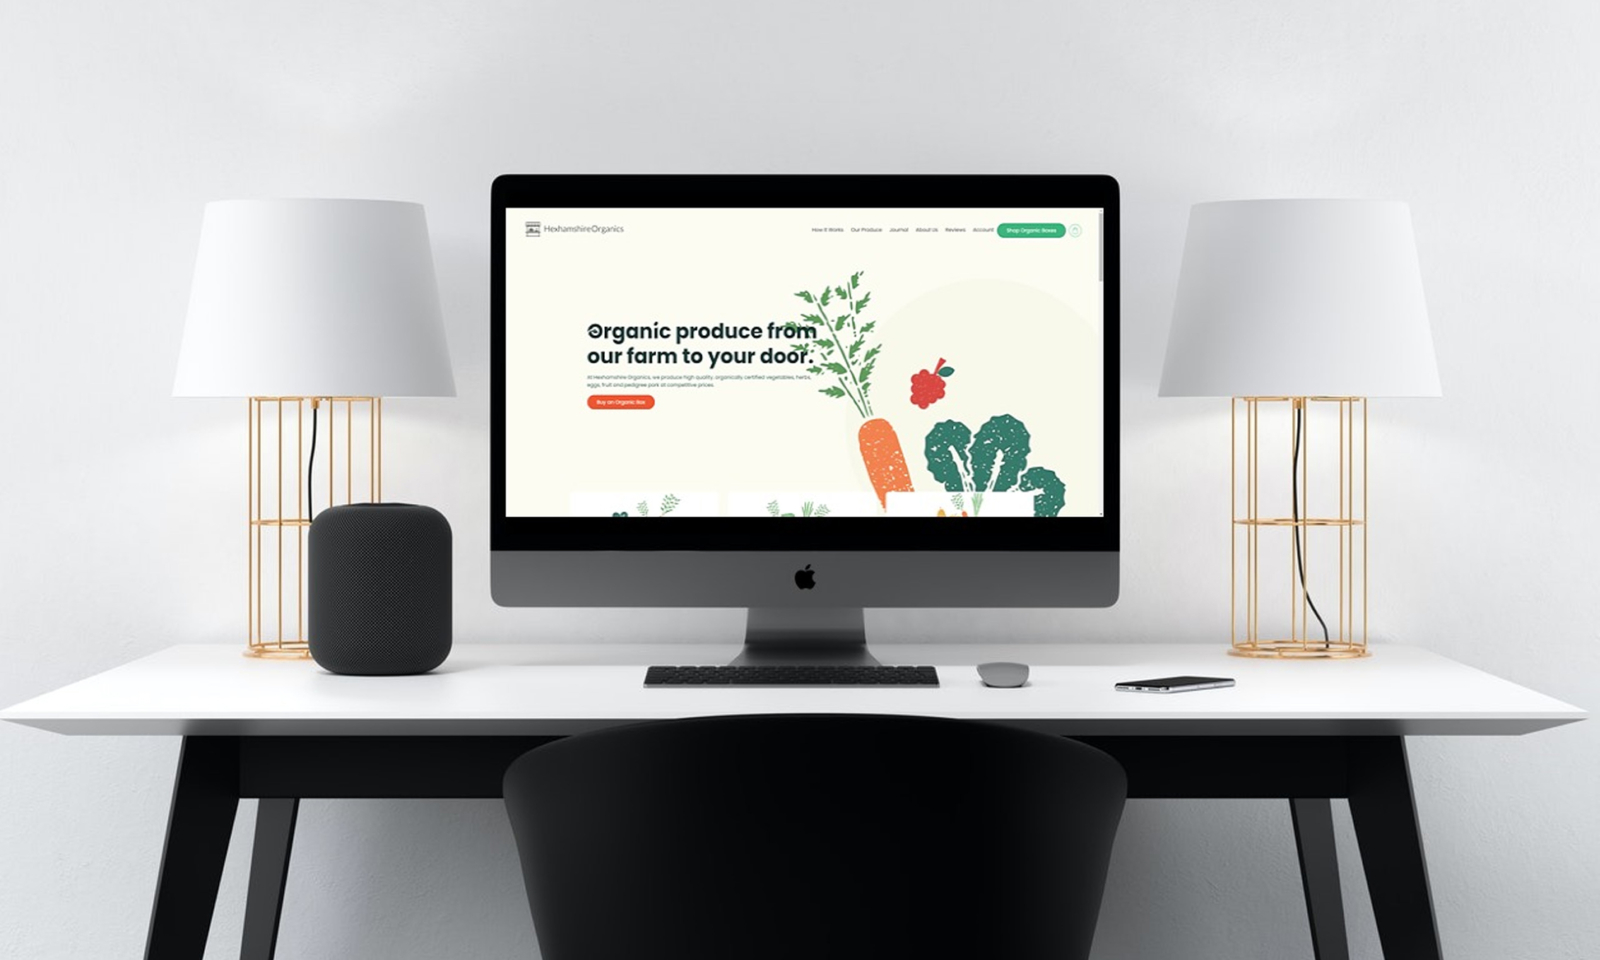 Venture Stream Launches Shopify Site for Hexhamshrie Organics